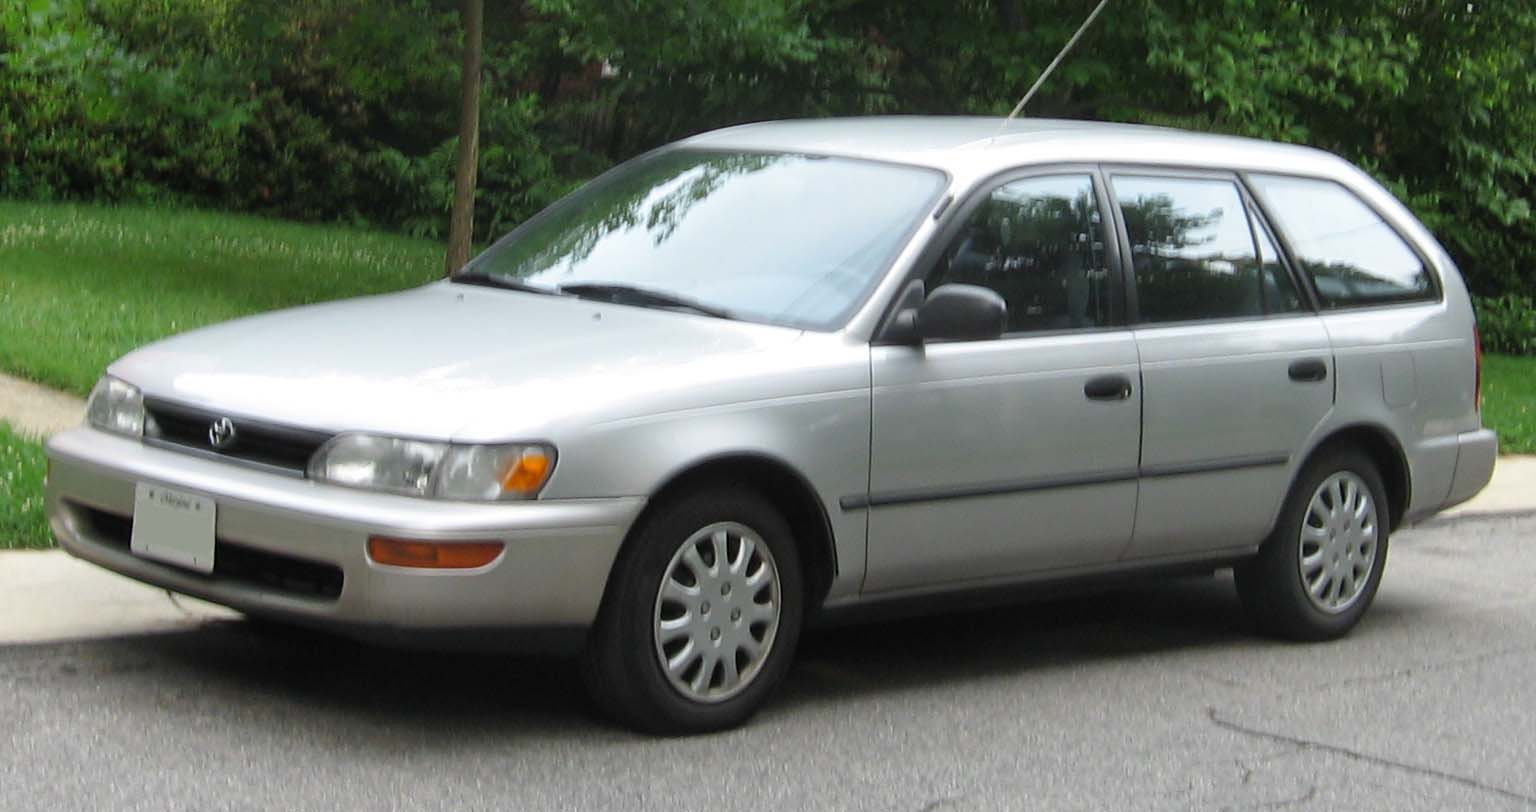 File:93-95 Toyota Corolla wagon front.jpg